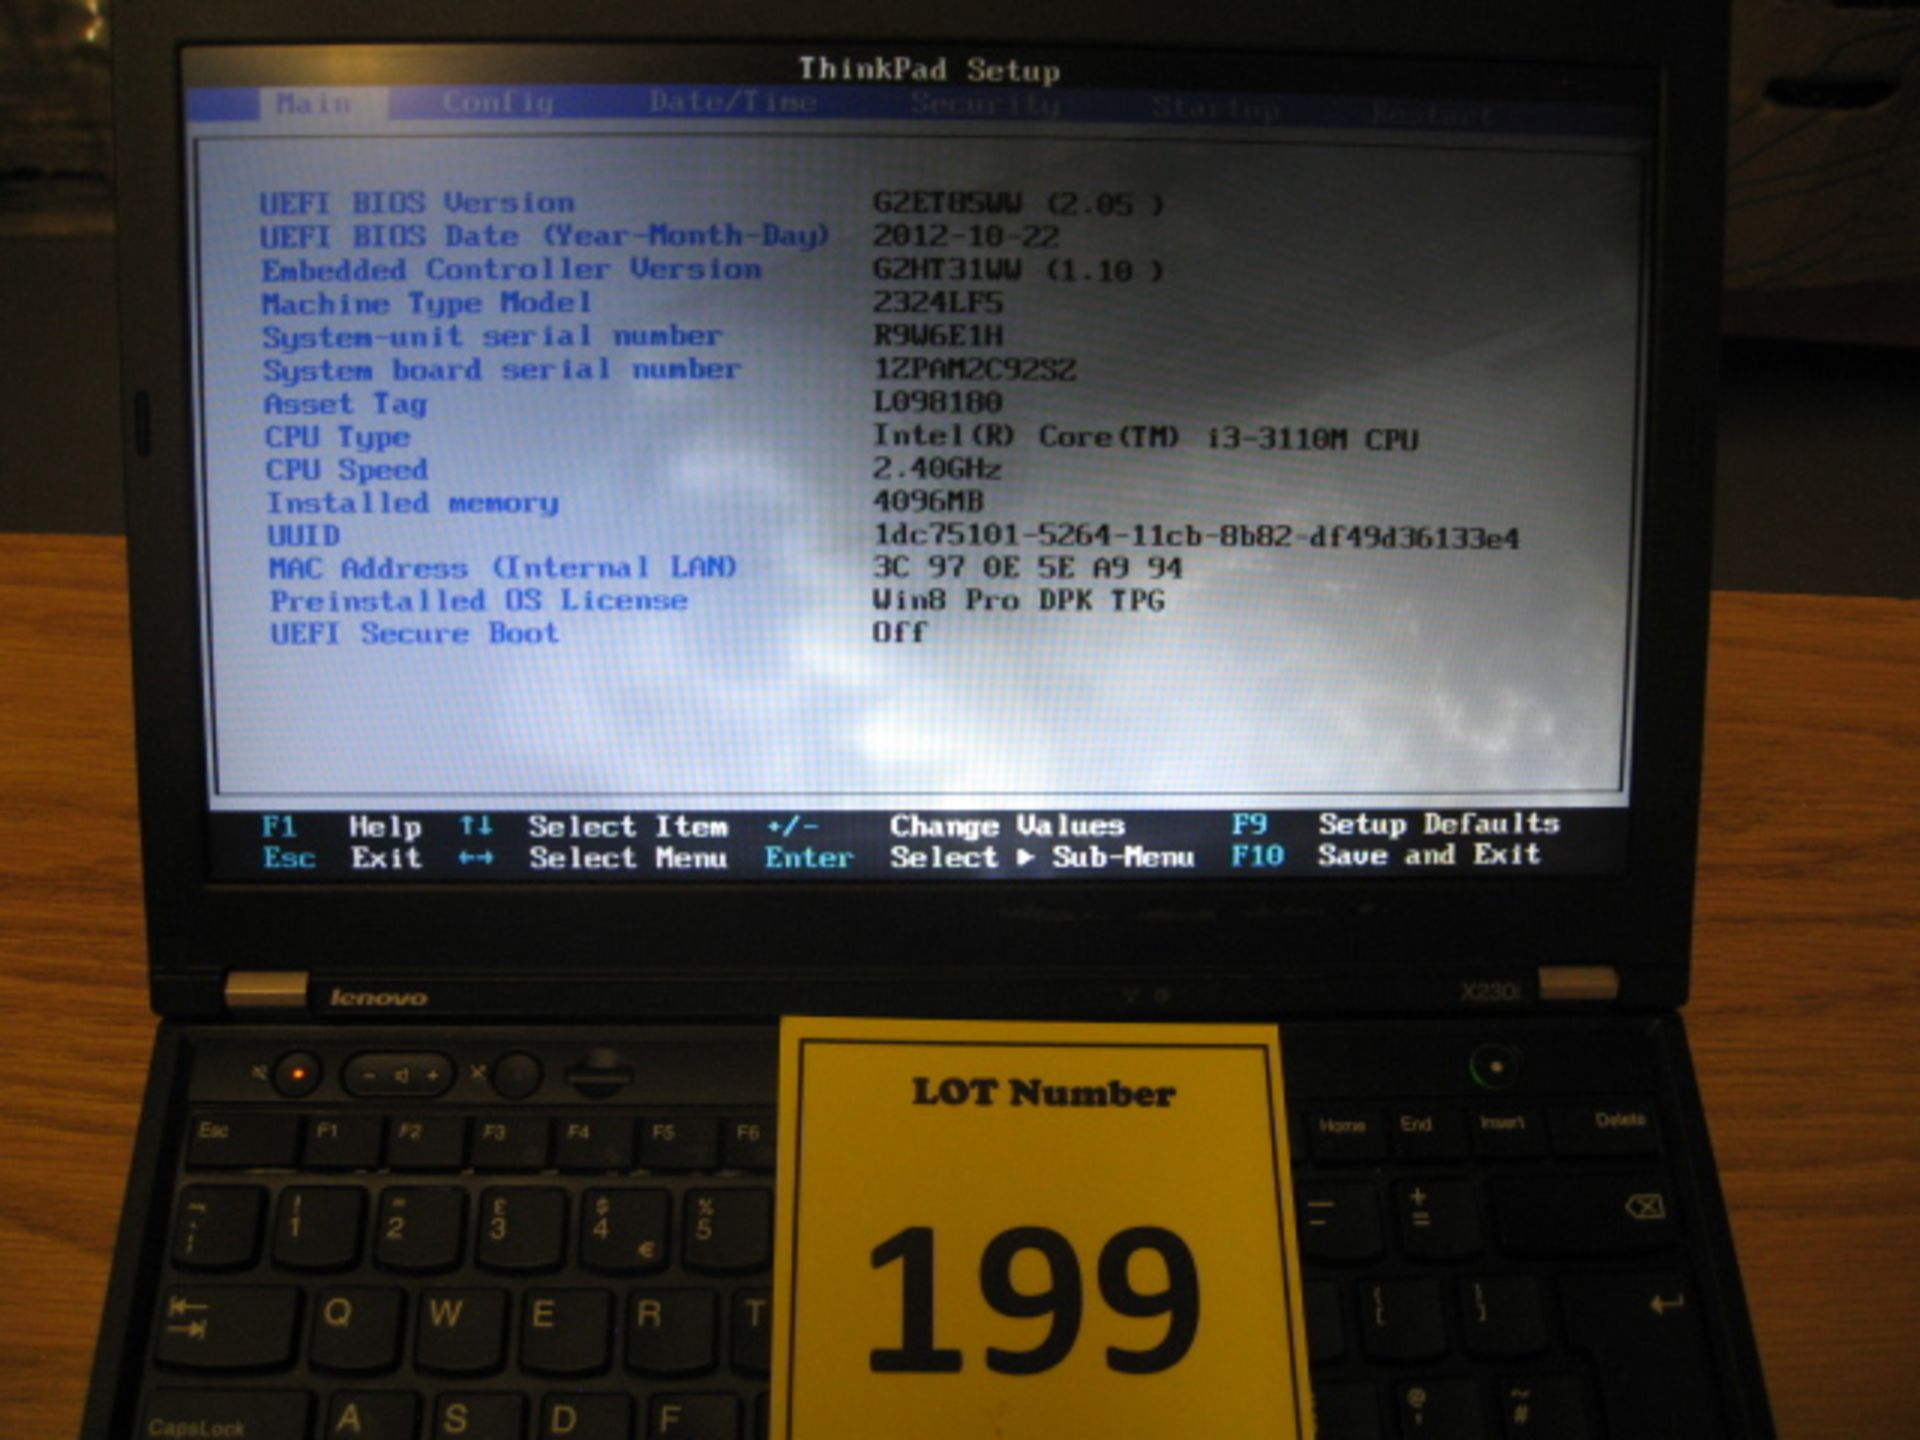 IBM Lenovo X230i Laptop, Core-i3/2.40, 4096/320, psu - Win 8 Pro Sticker - Watermarks on screen - Image 2 of 3